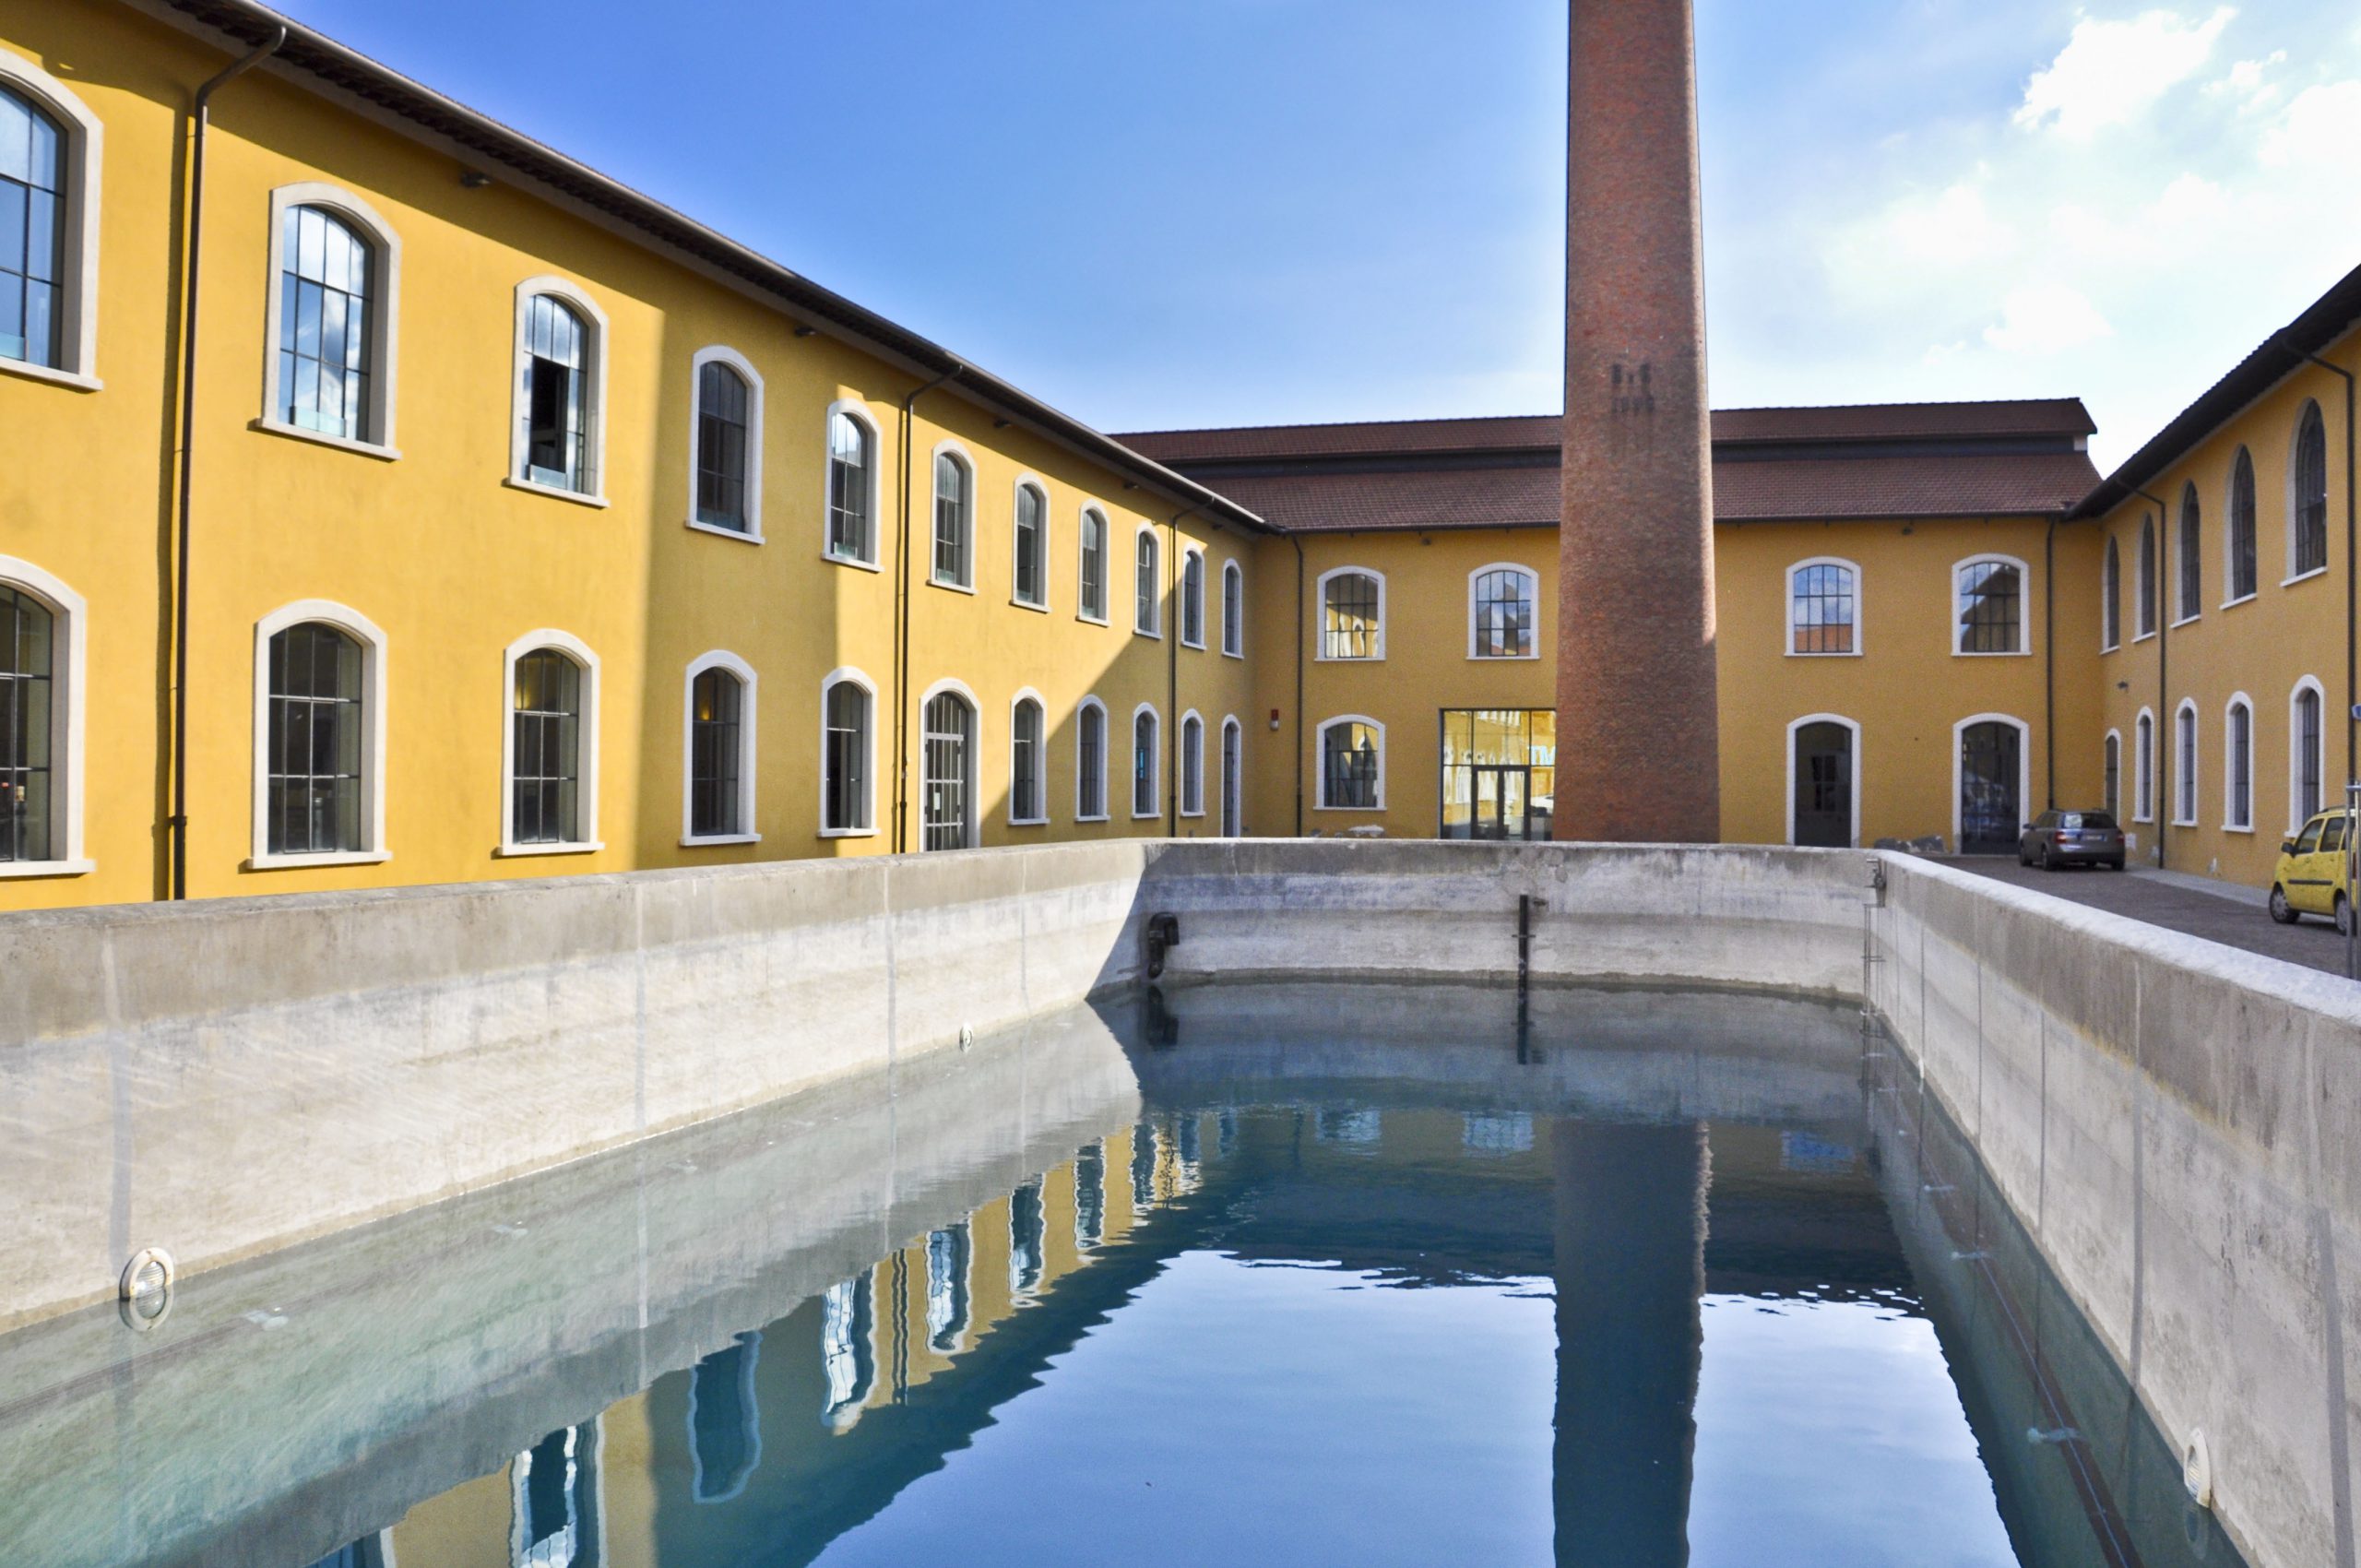 Prato's iconic textile museum